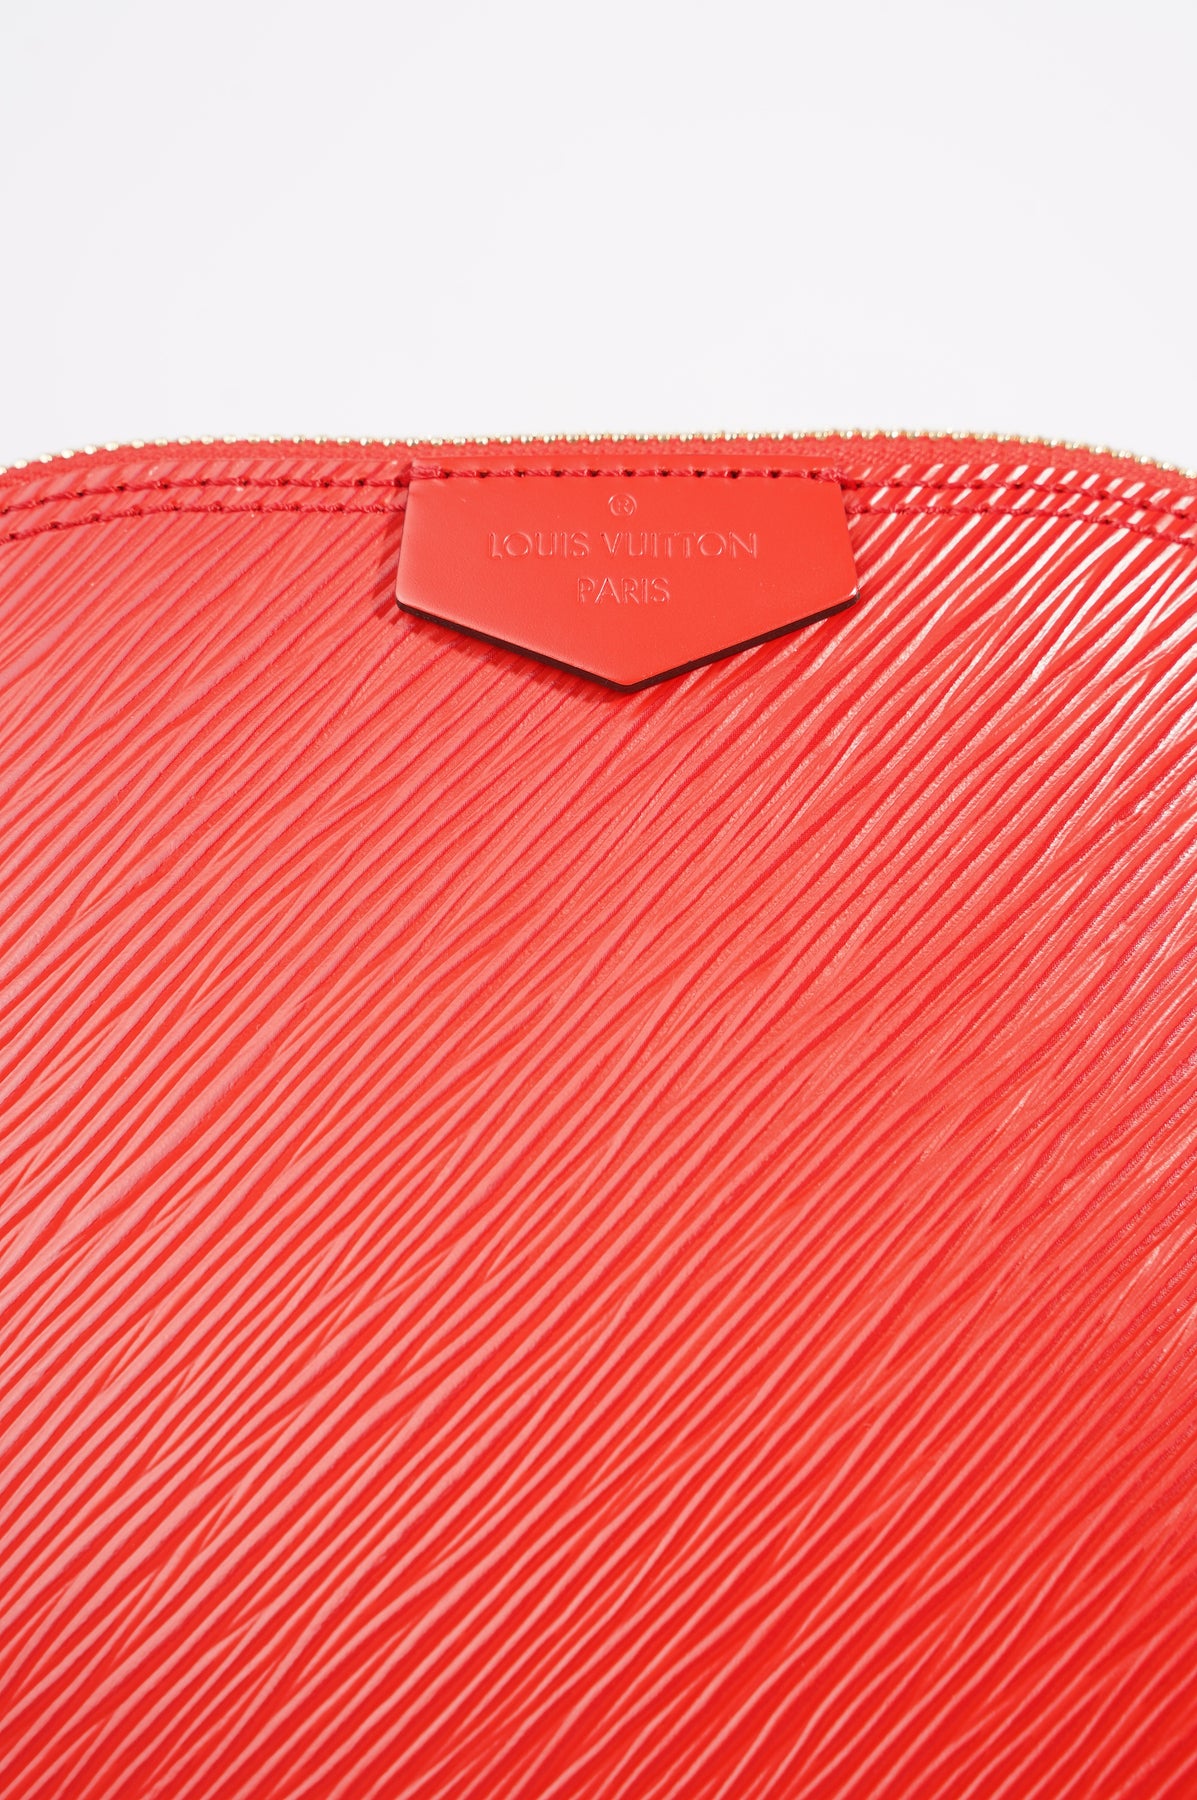 Louis Vuitton Alma Mini Bag Red Epi Leather – Luxe Collective